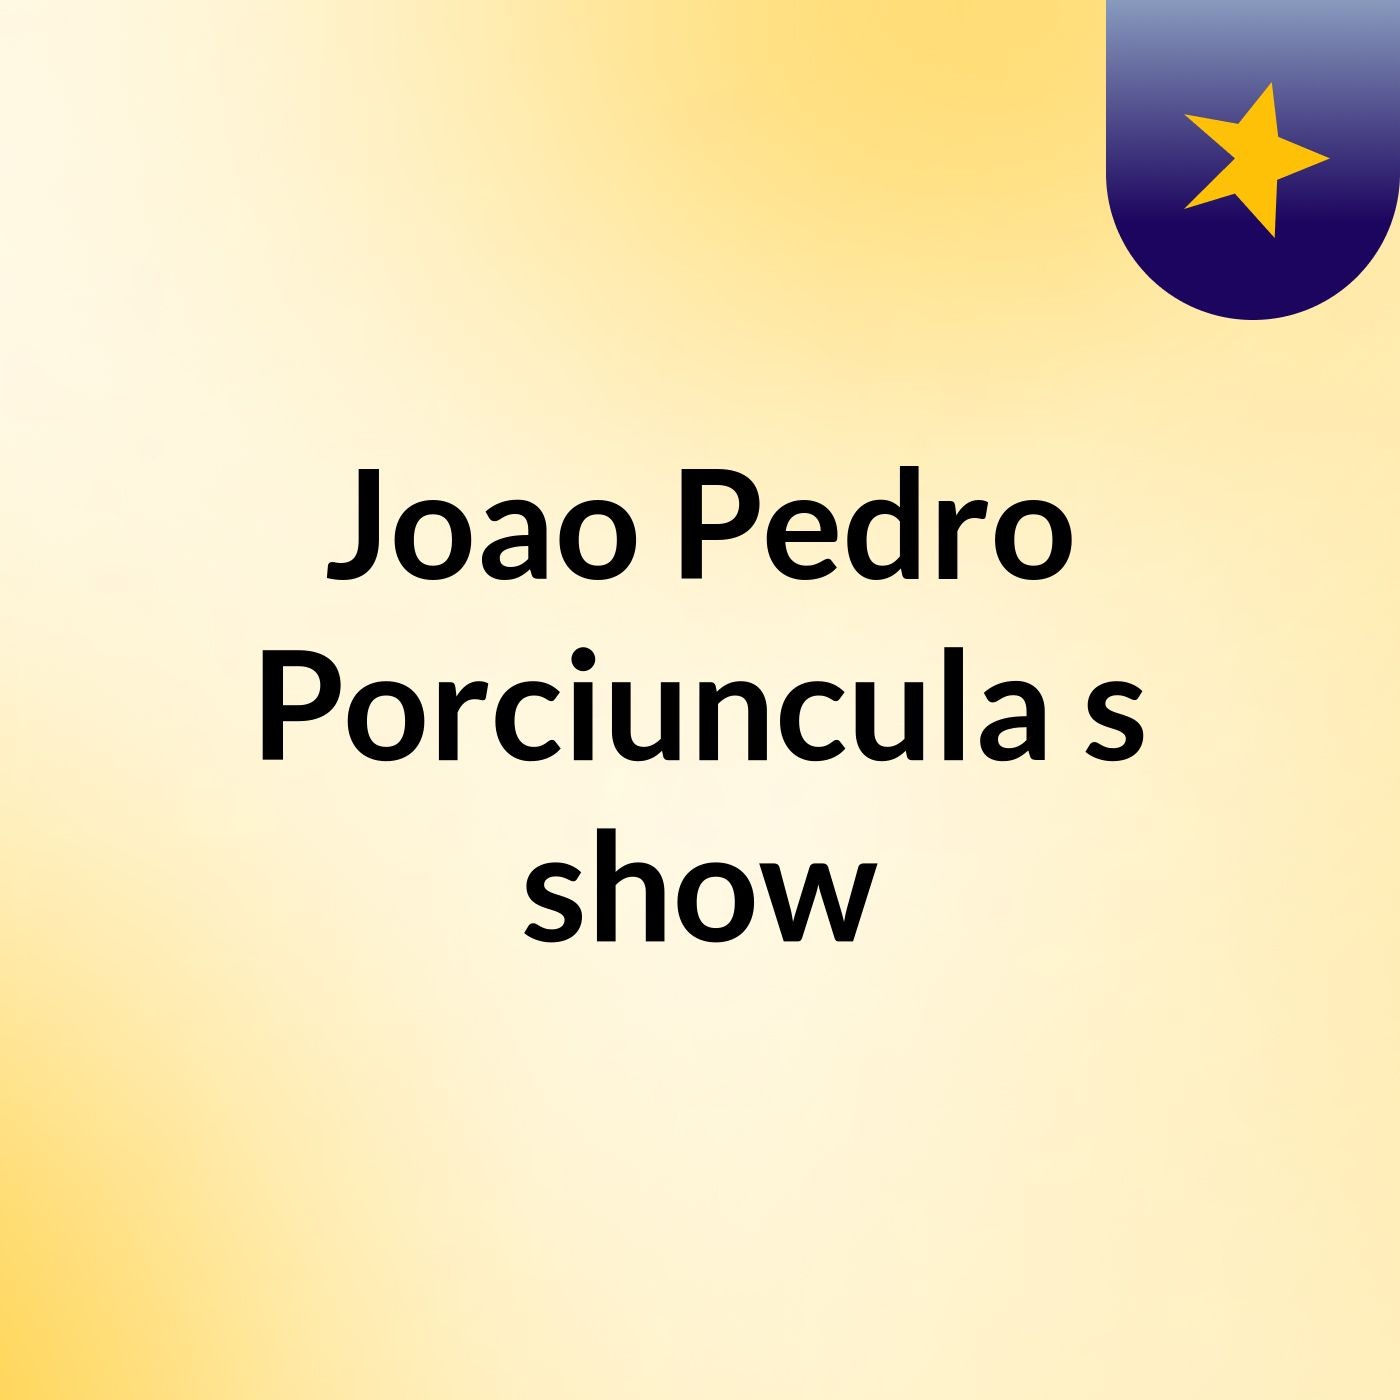 Joao Pedro Porciuncula's show